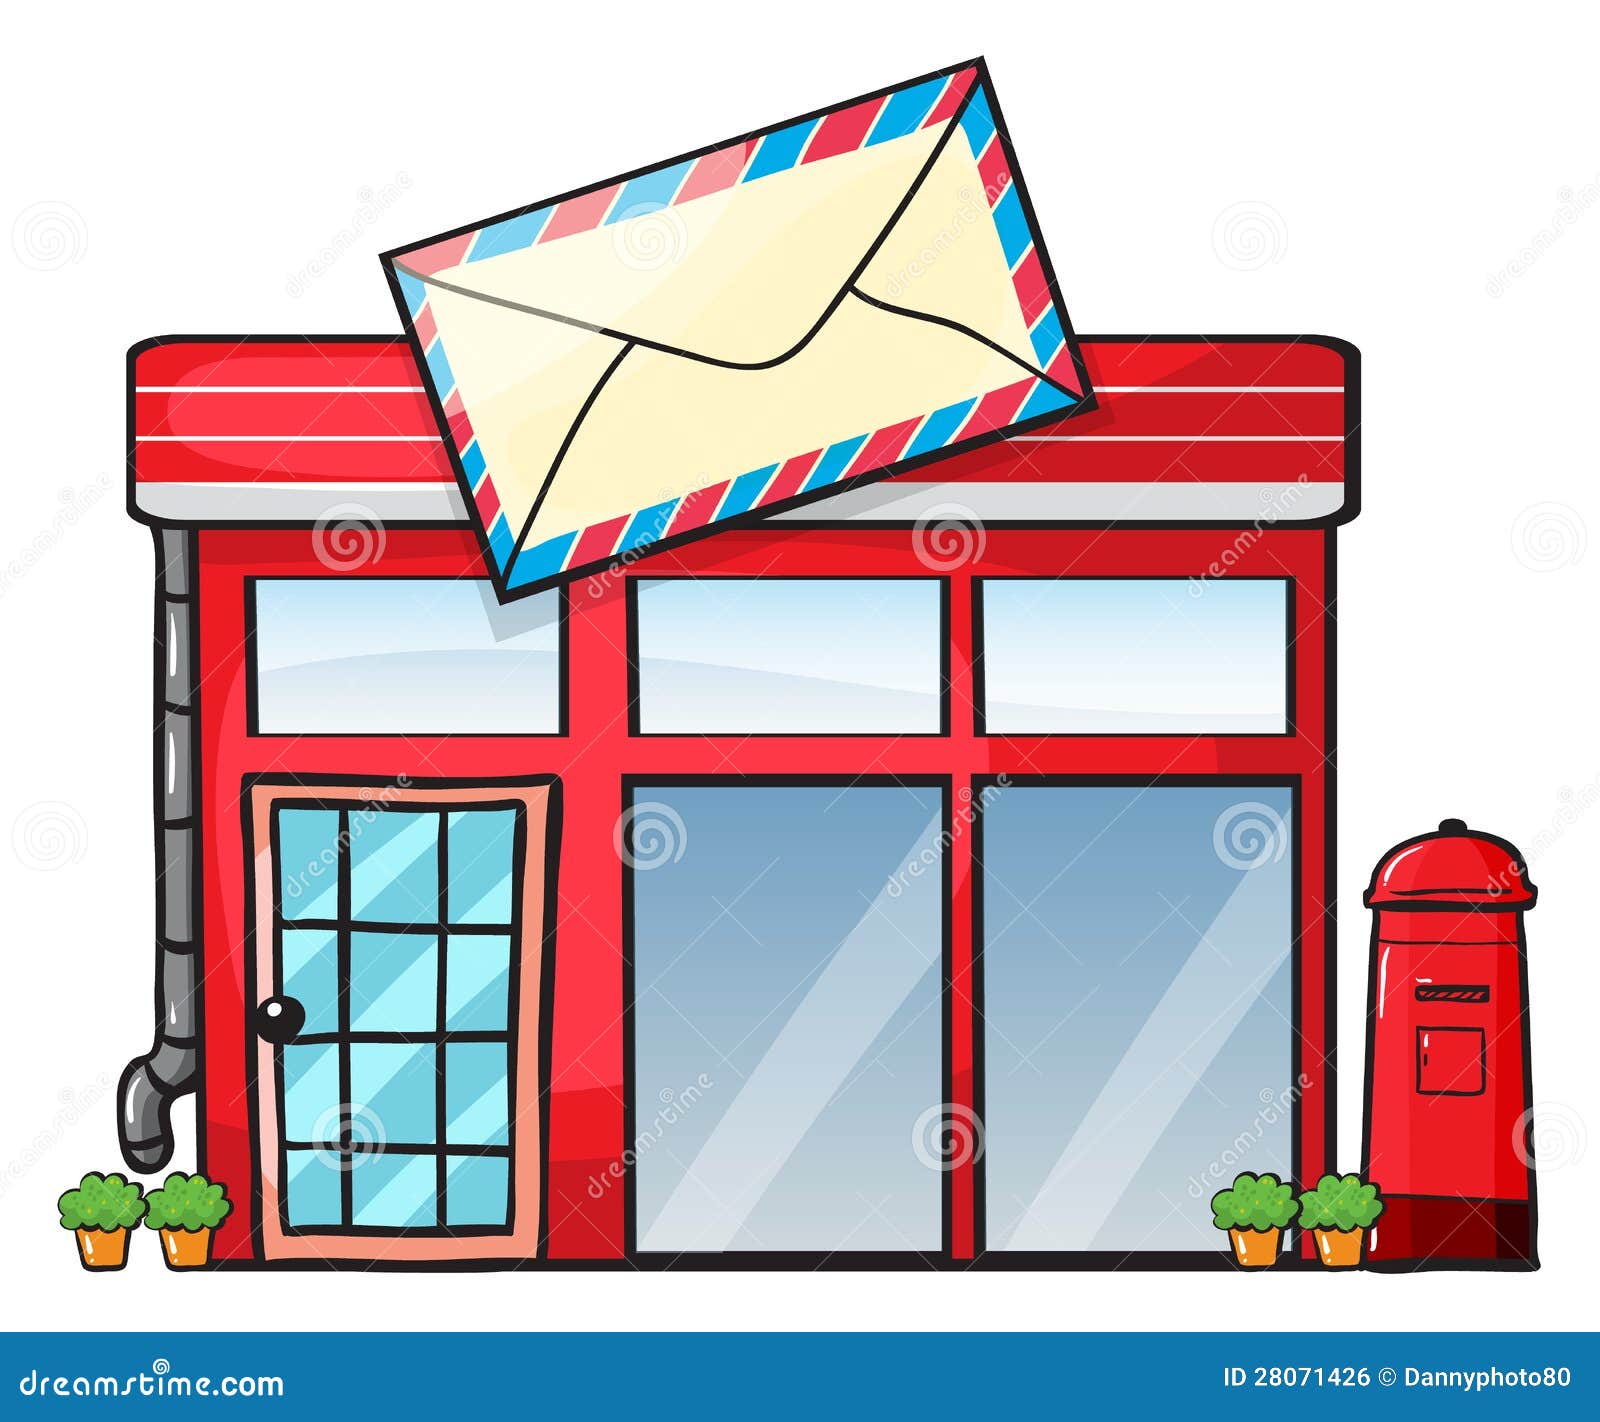 A post office stock illustration. Illustration of model - 28071426